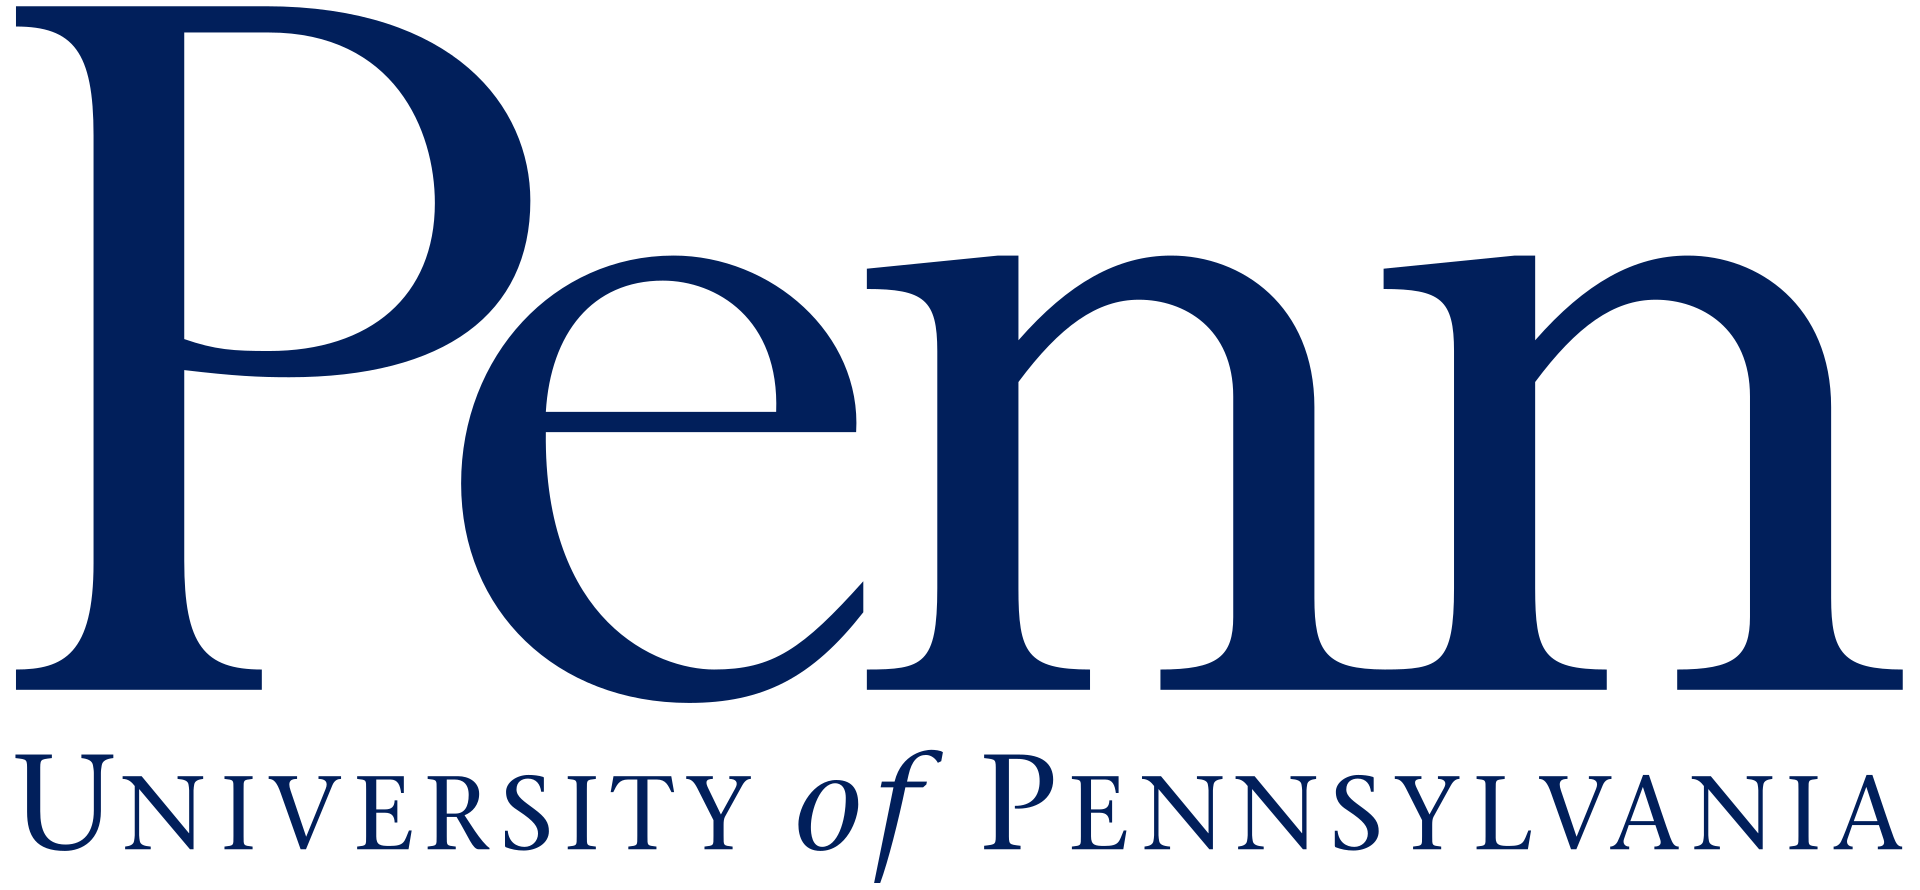 University of Pennsylvania logo, By University of Pennsylvania - https://www.upenn.edu/about/styleguide-logo-branding, Public Domain, https://commons.wikimedia.org/w/index.php?curid=66569976"